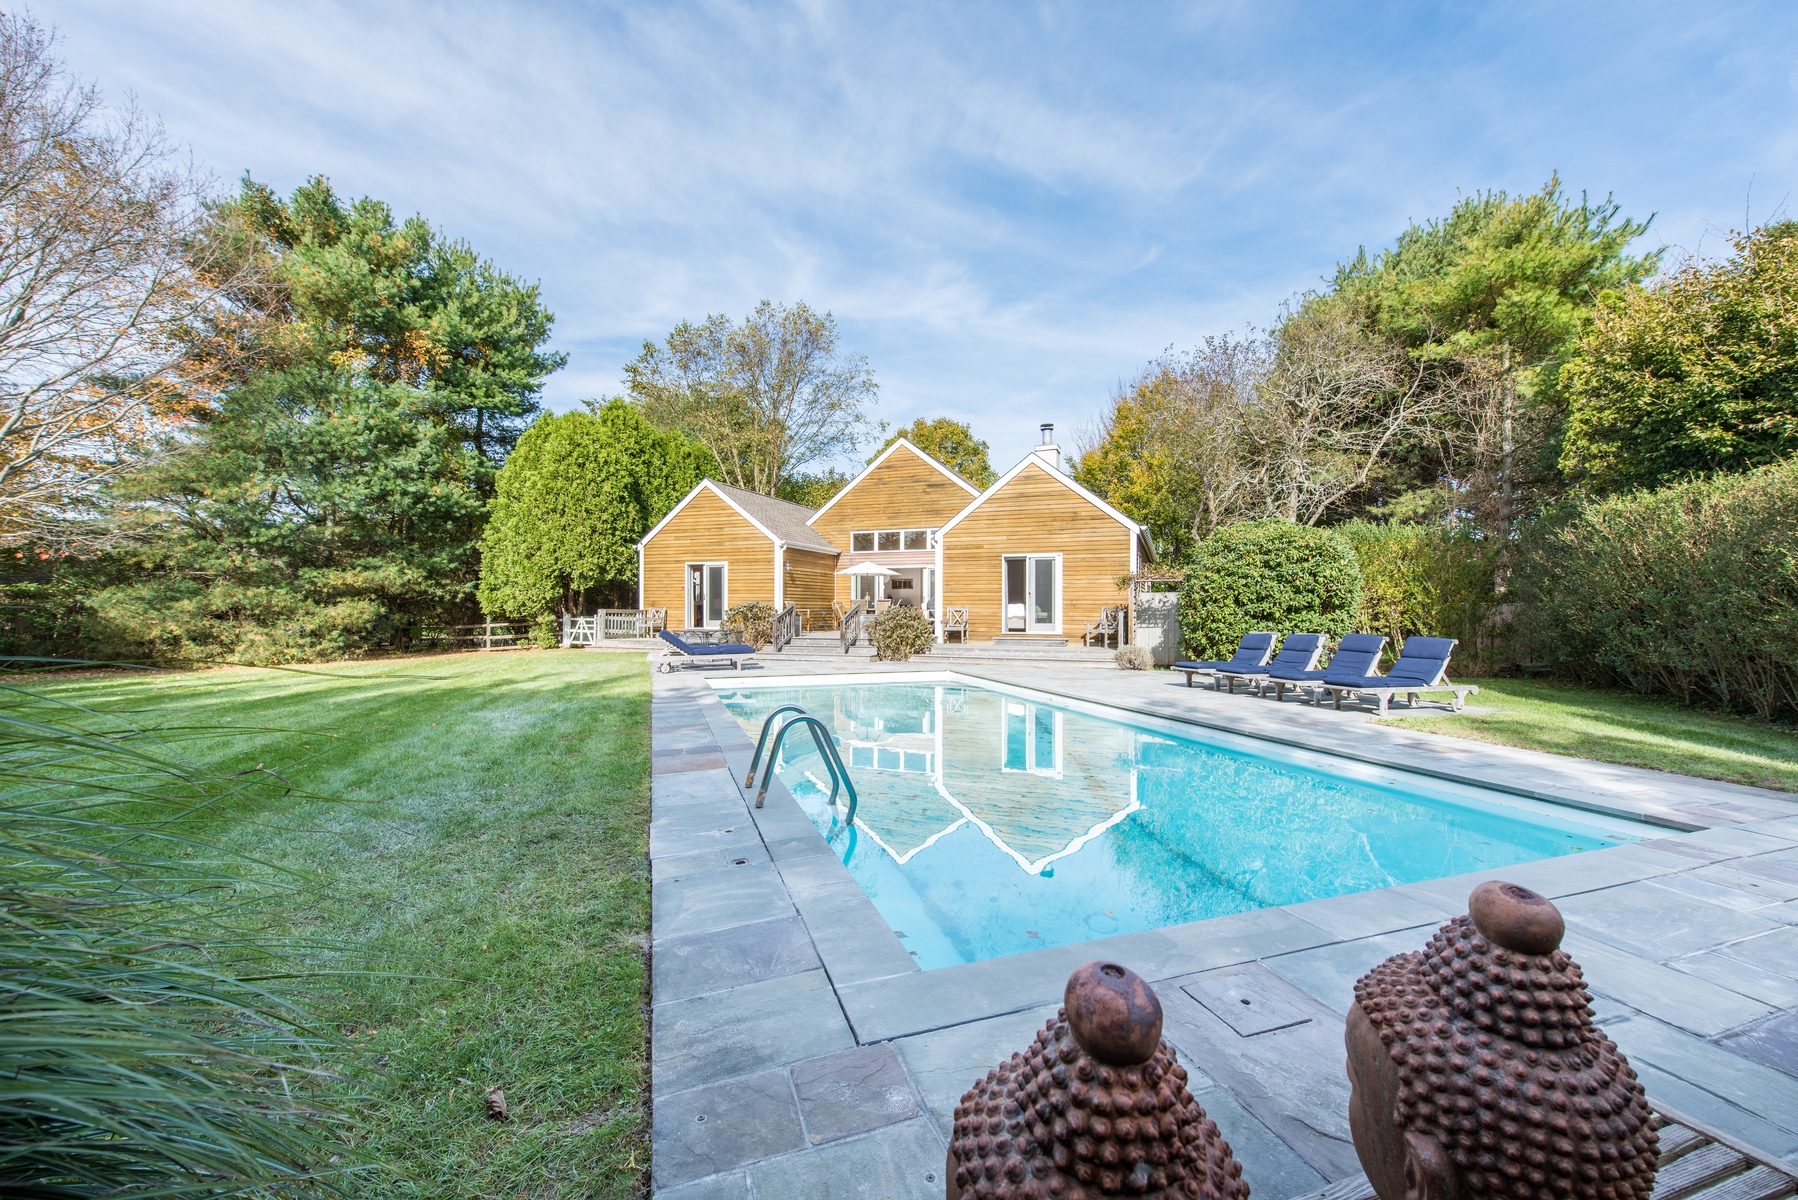 Rental Property at Bridgehampton, Bridgehampton, Hamptons, NY - Bedrooms: 3 
Bathrooms: 2  - $45,000 MO.